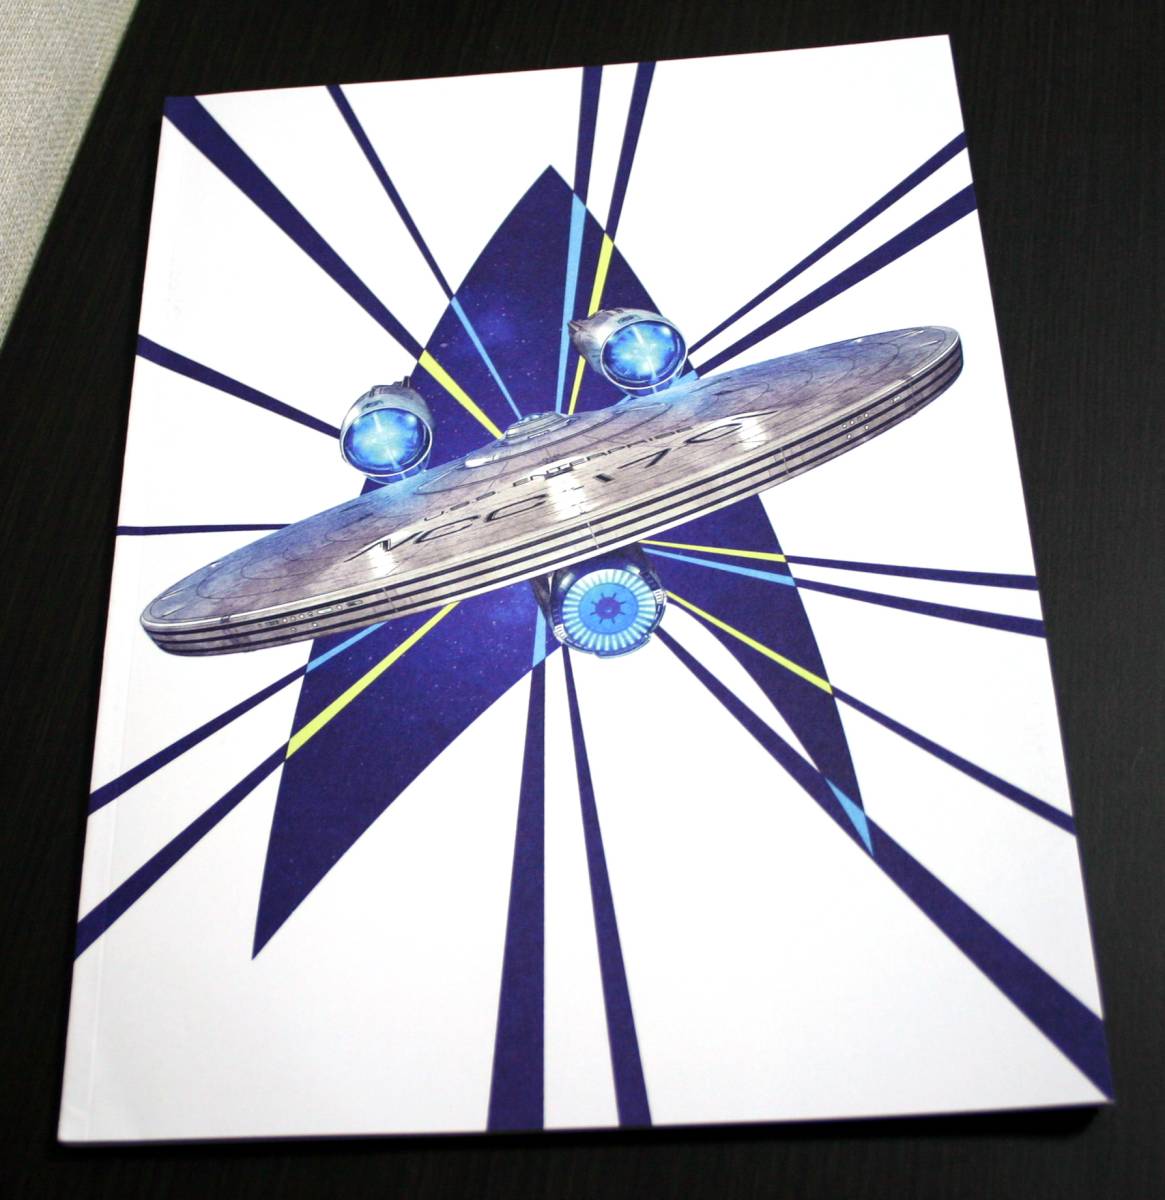 [ collector limitation ] Star * Trek pamphlet design book super rare * cosmos Daisaku war BEYOND * very valuable . commodity..